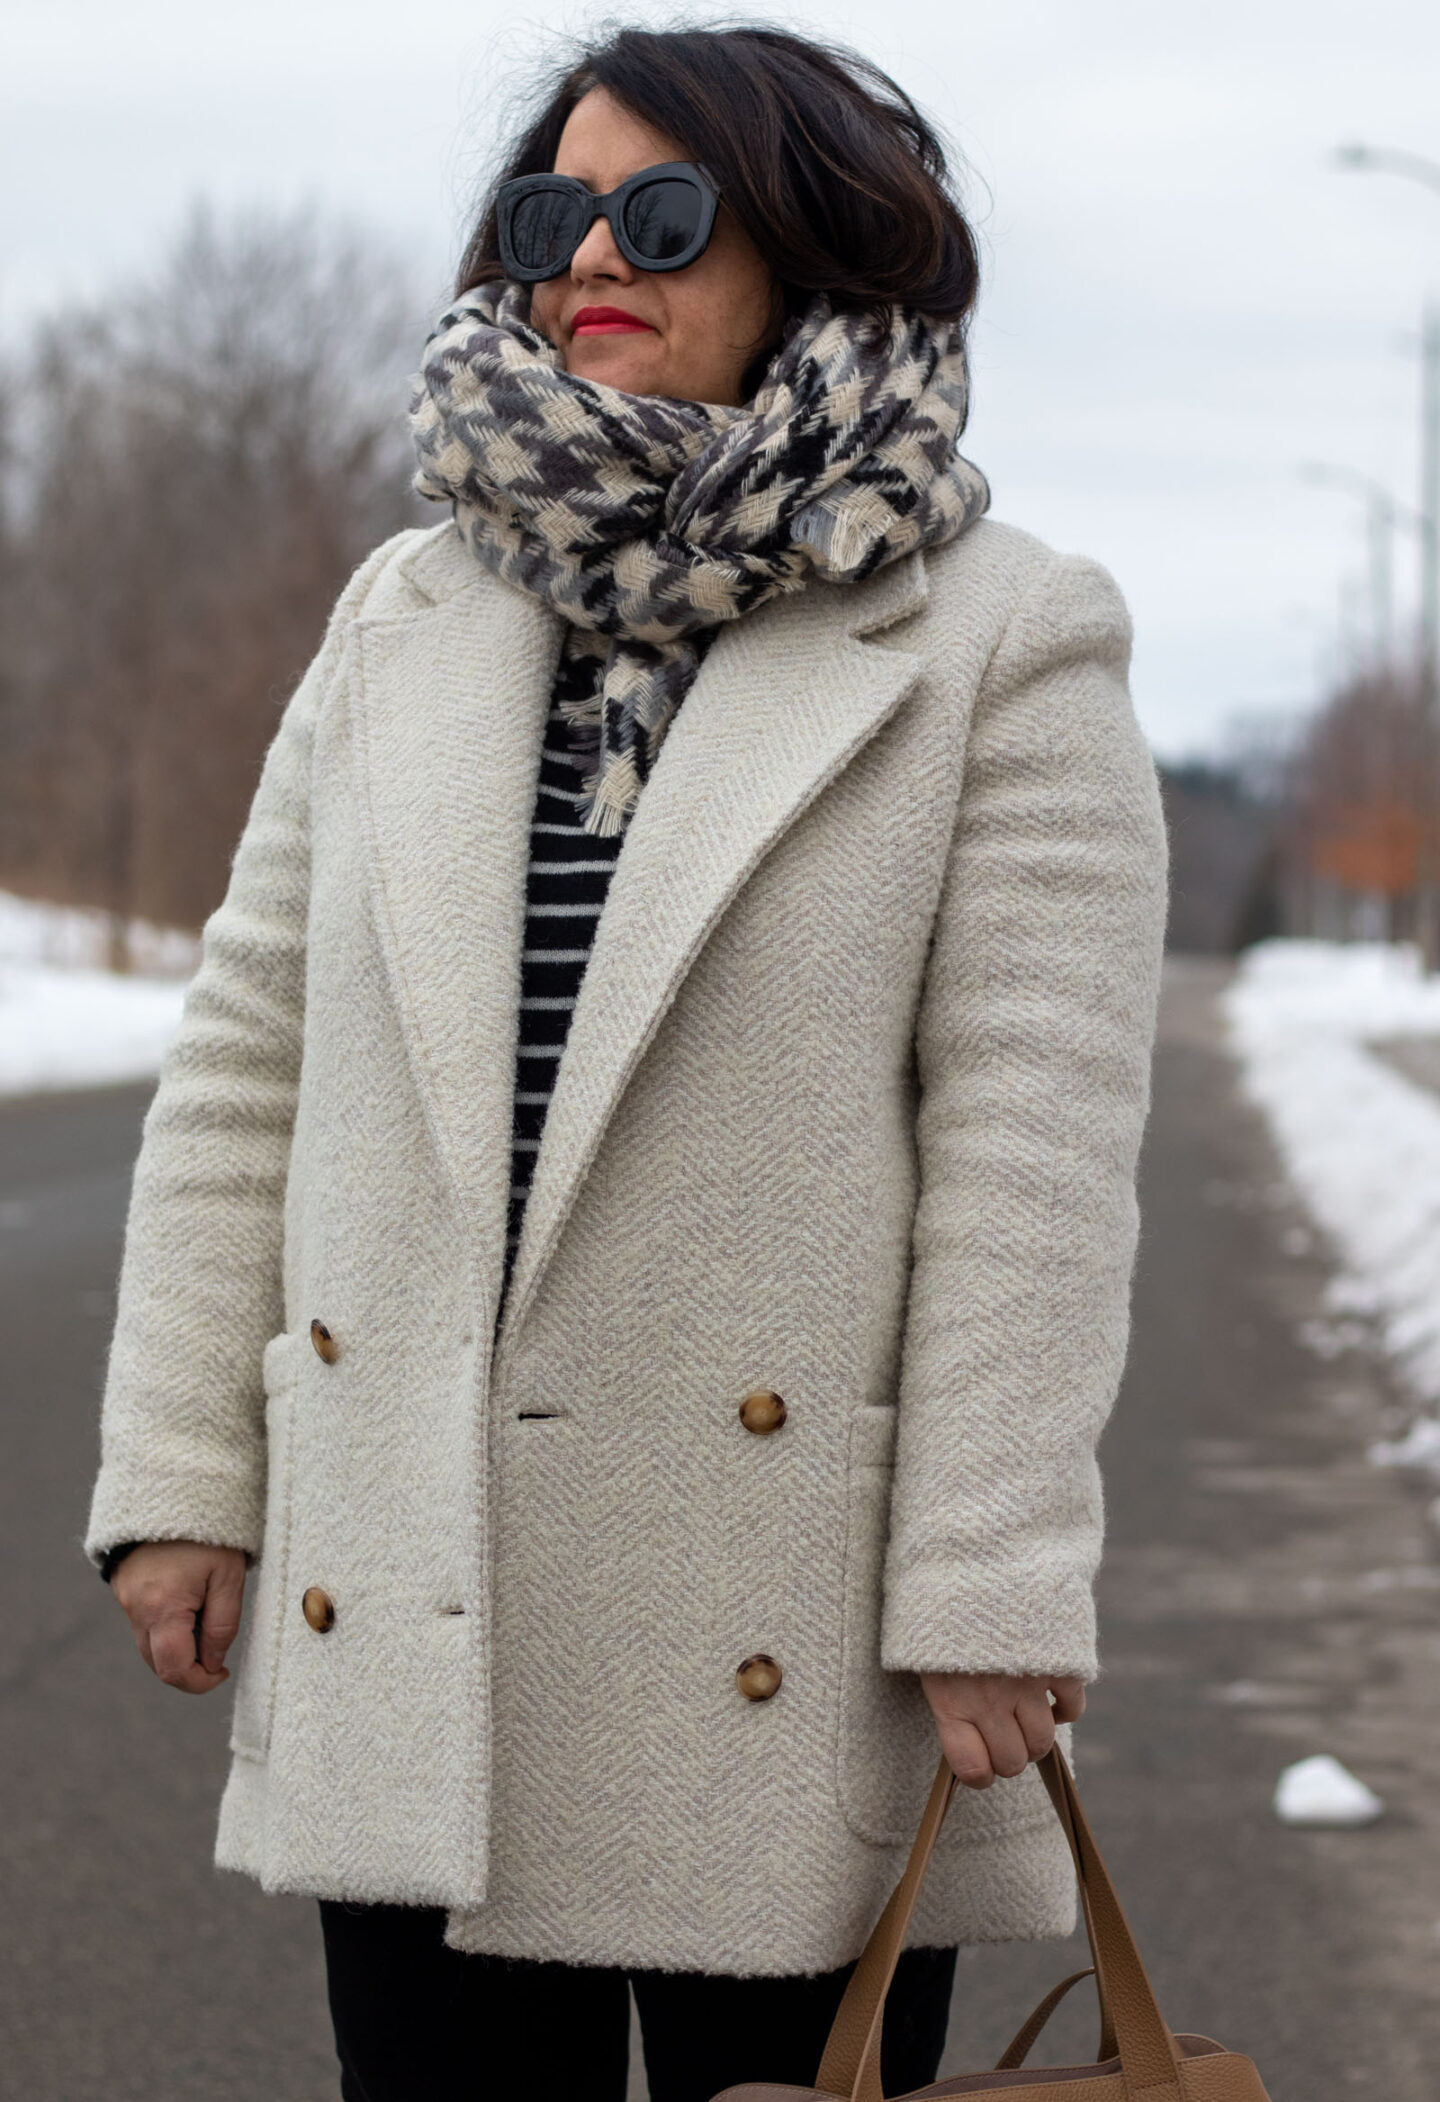 sezane harper coat, neutral winter outfit